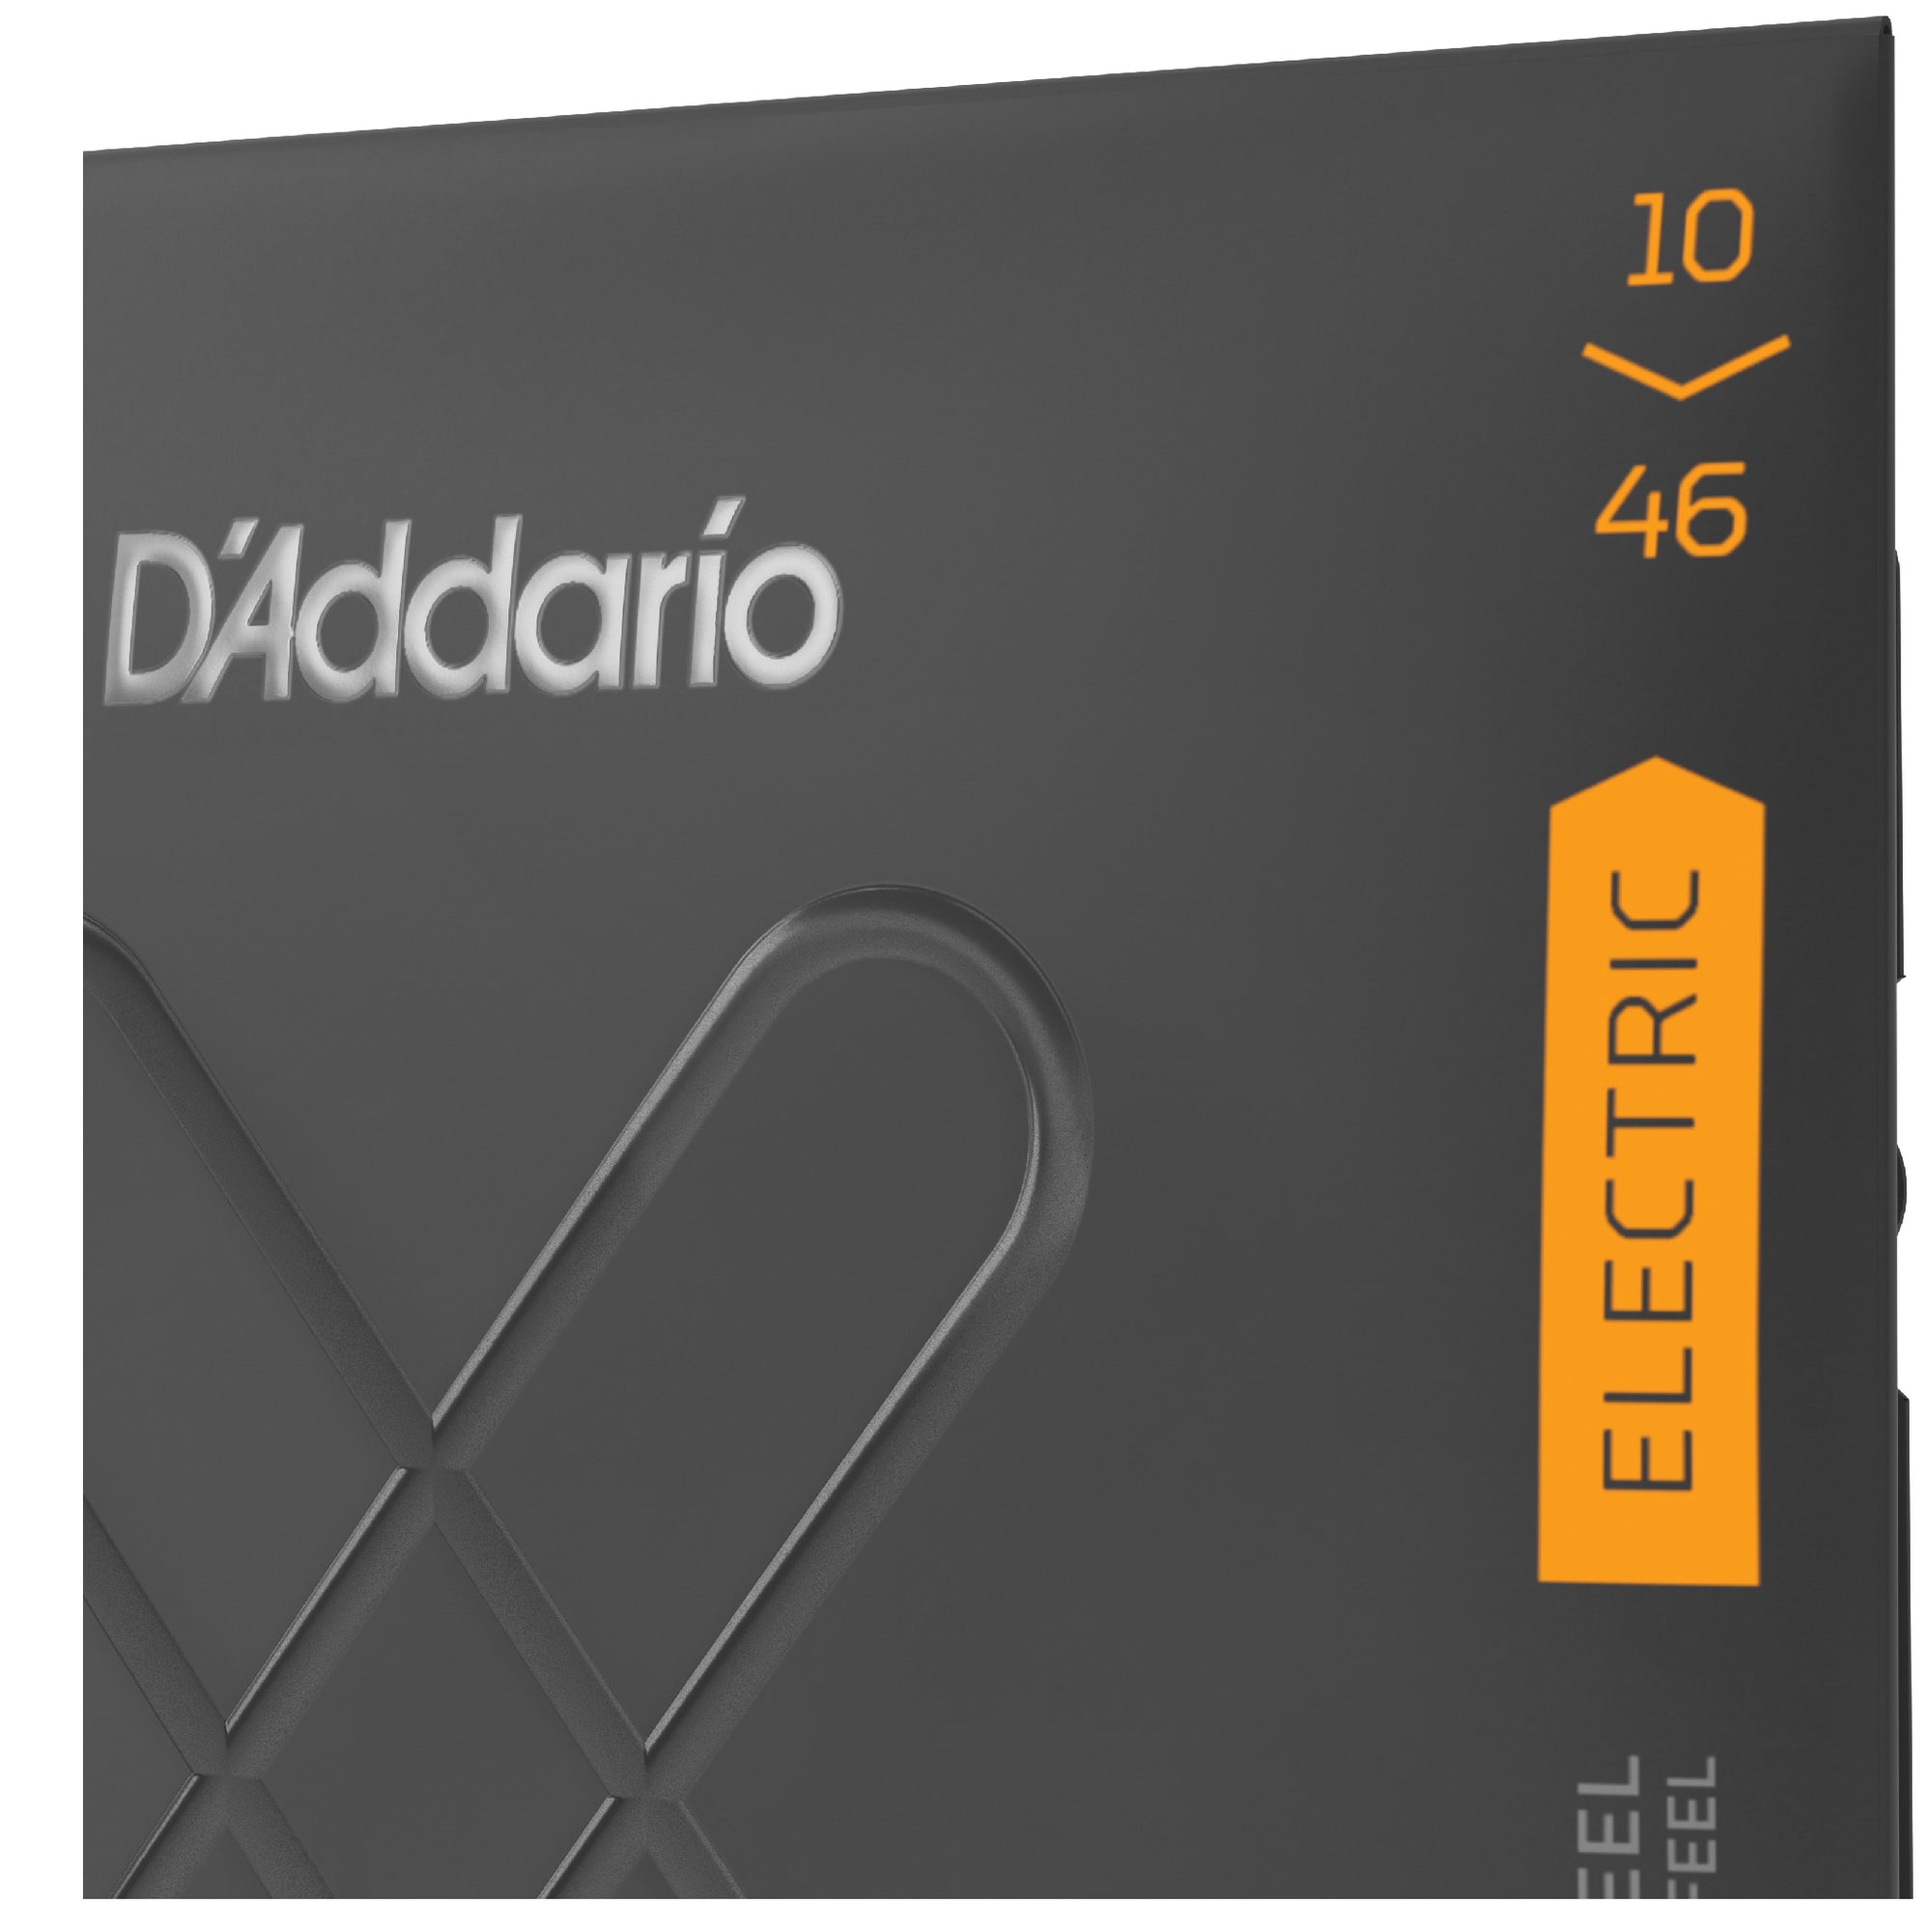 D'Addario XTE1046 10-46 XT Nickel Regular Light Electric Guitar Strings 3rd pic